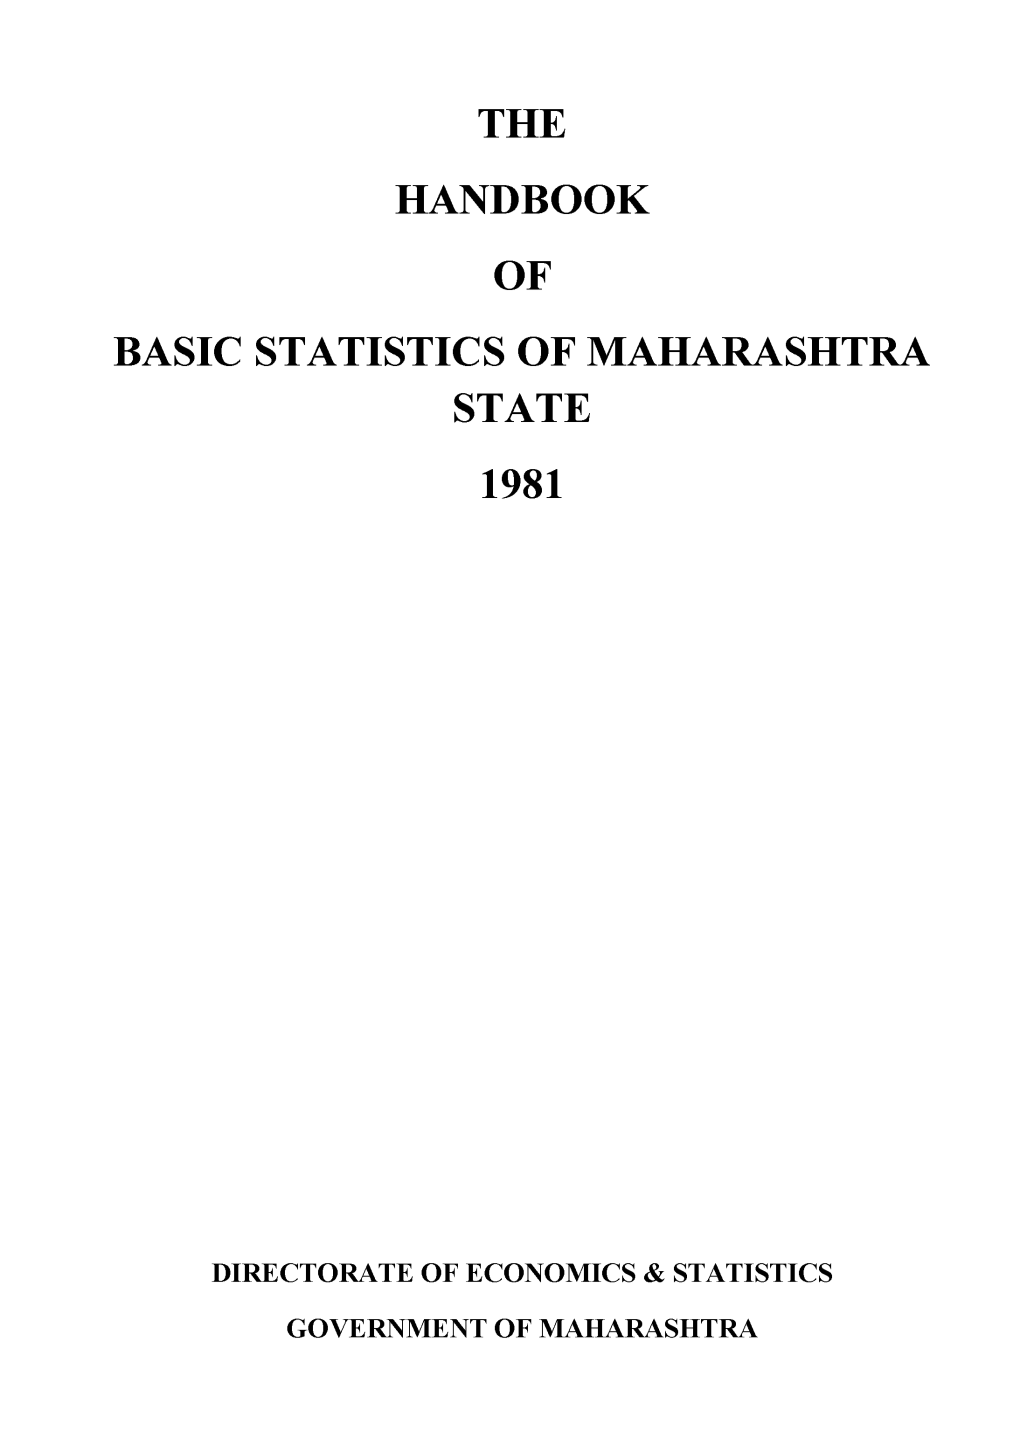 The Handbook of Basic Statistics of Maharashtra State 1981